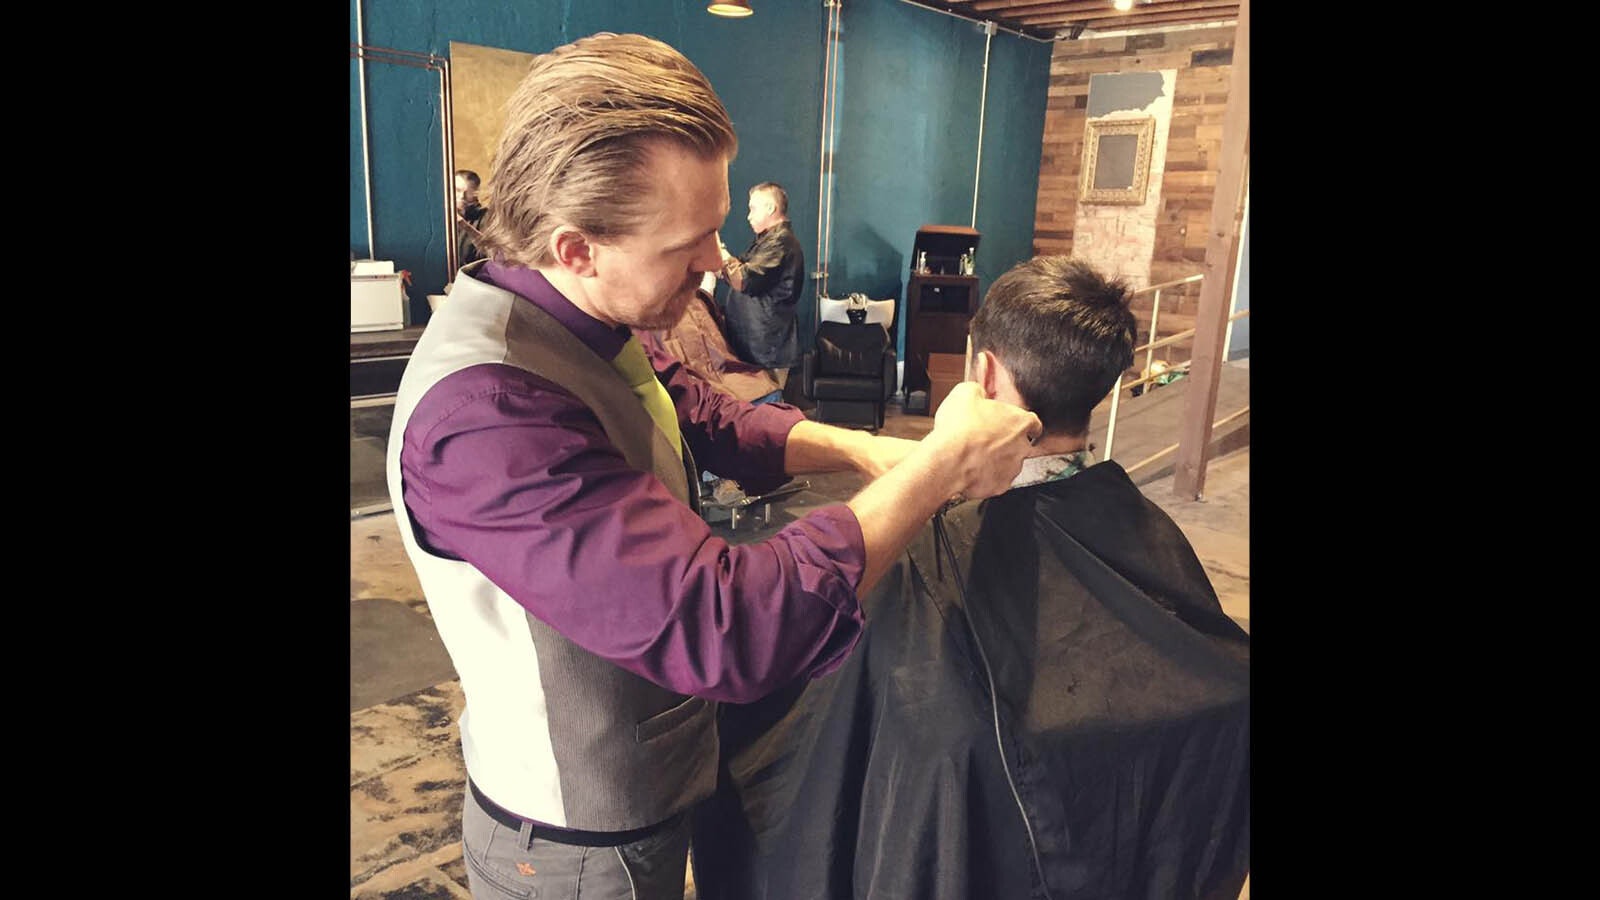 Trevers Chapman gives a haircut at his Gillette barbershop, Rapscallions.